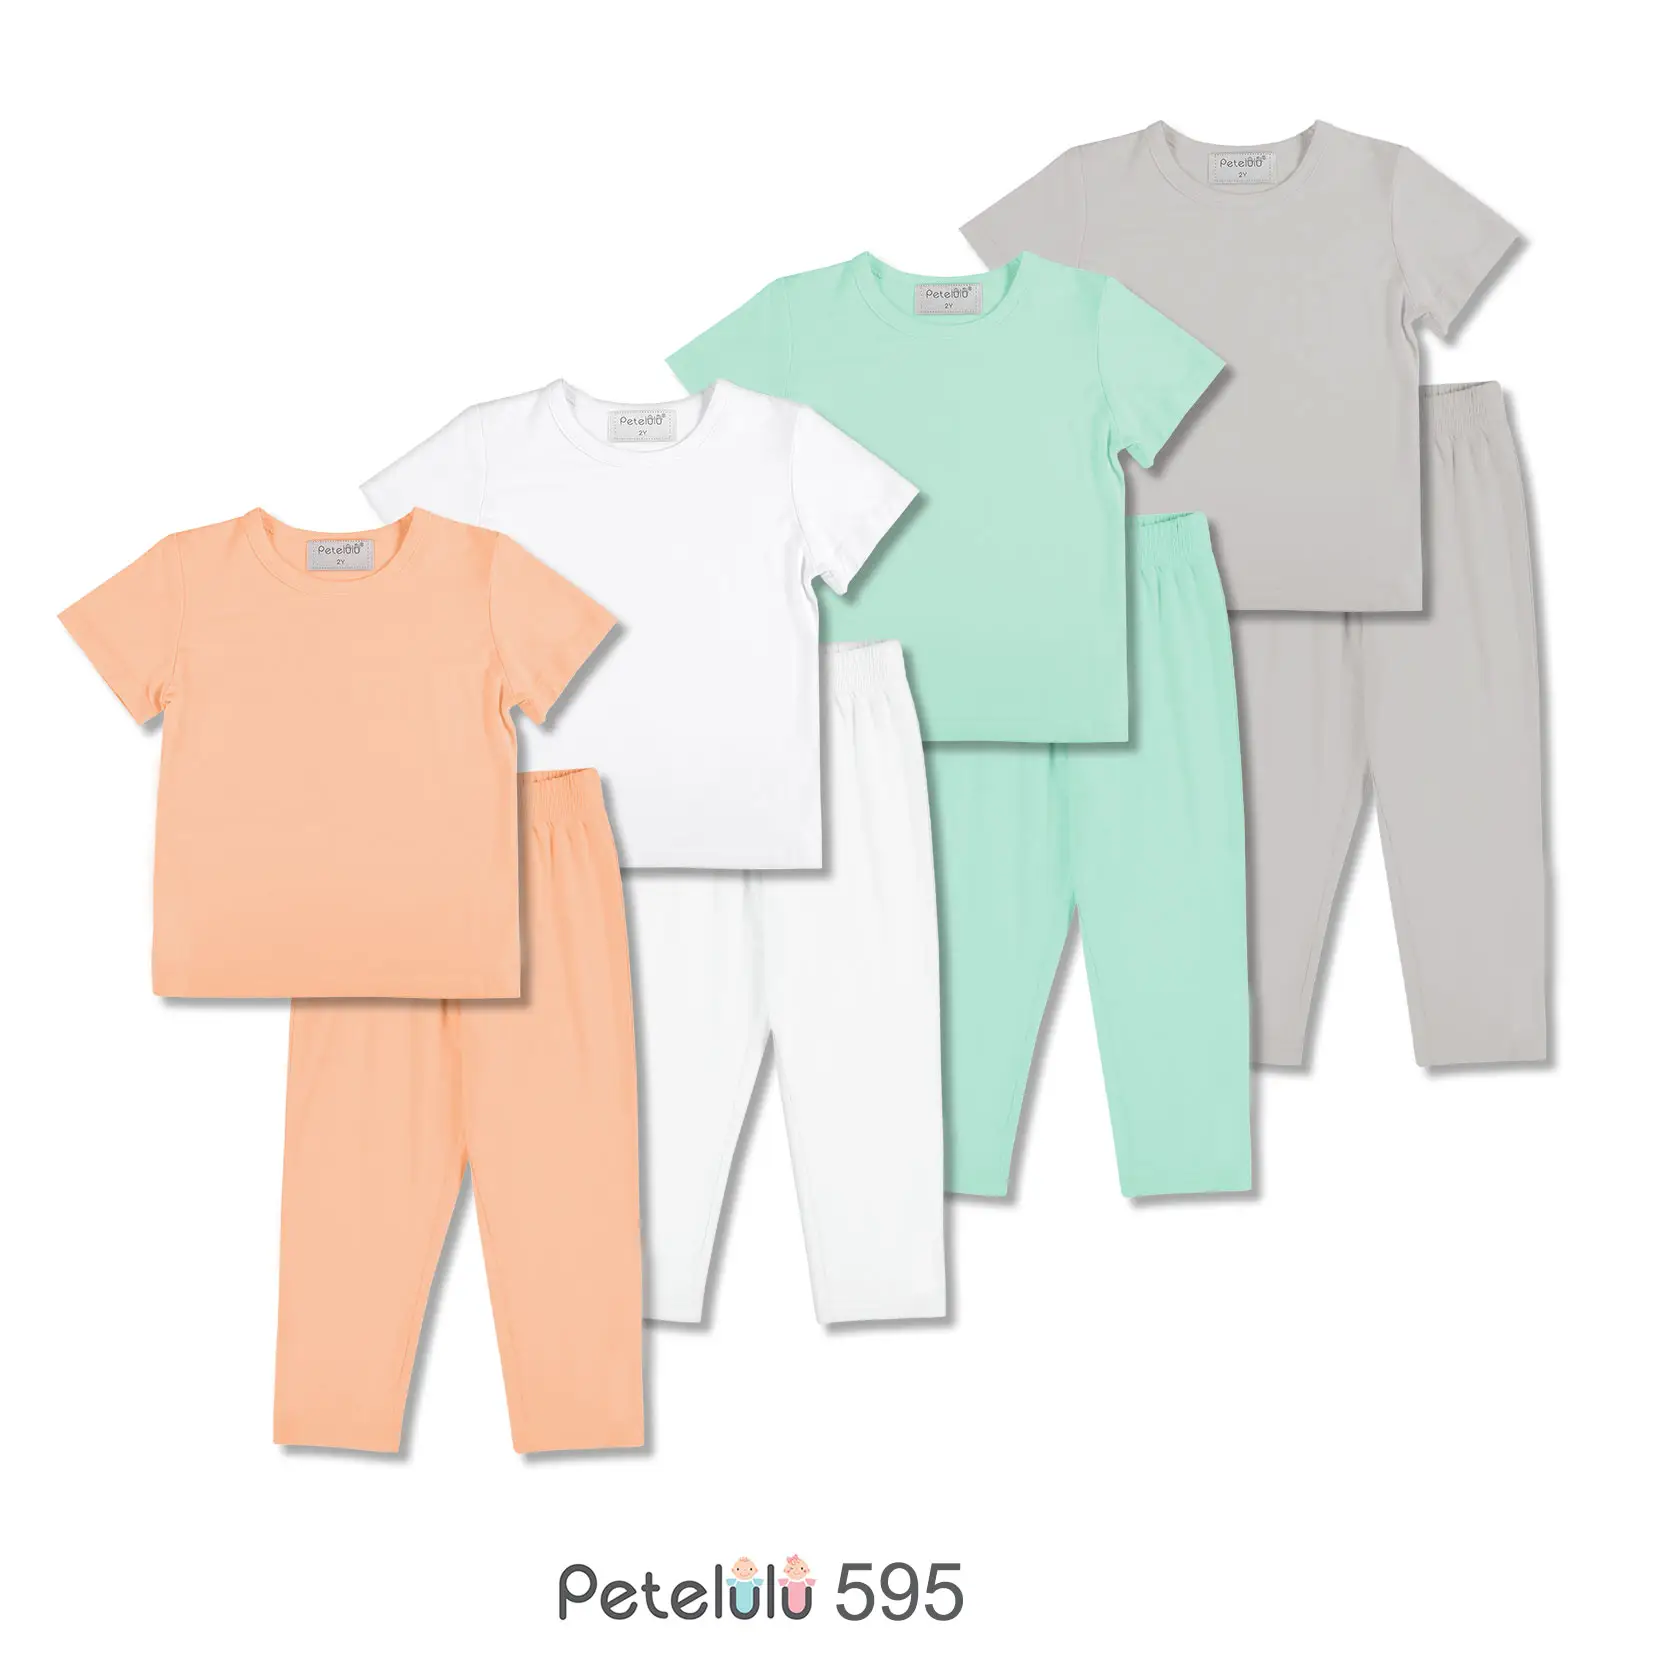 Petelulu Summer Children's Clothing Sets Baby Boy's Party Apparel Short Sleeve T Shirt Jeans Short Cotton OEM Service Round 7208